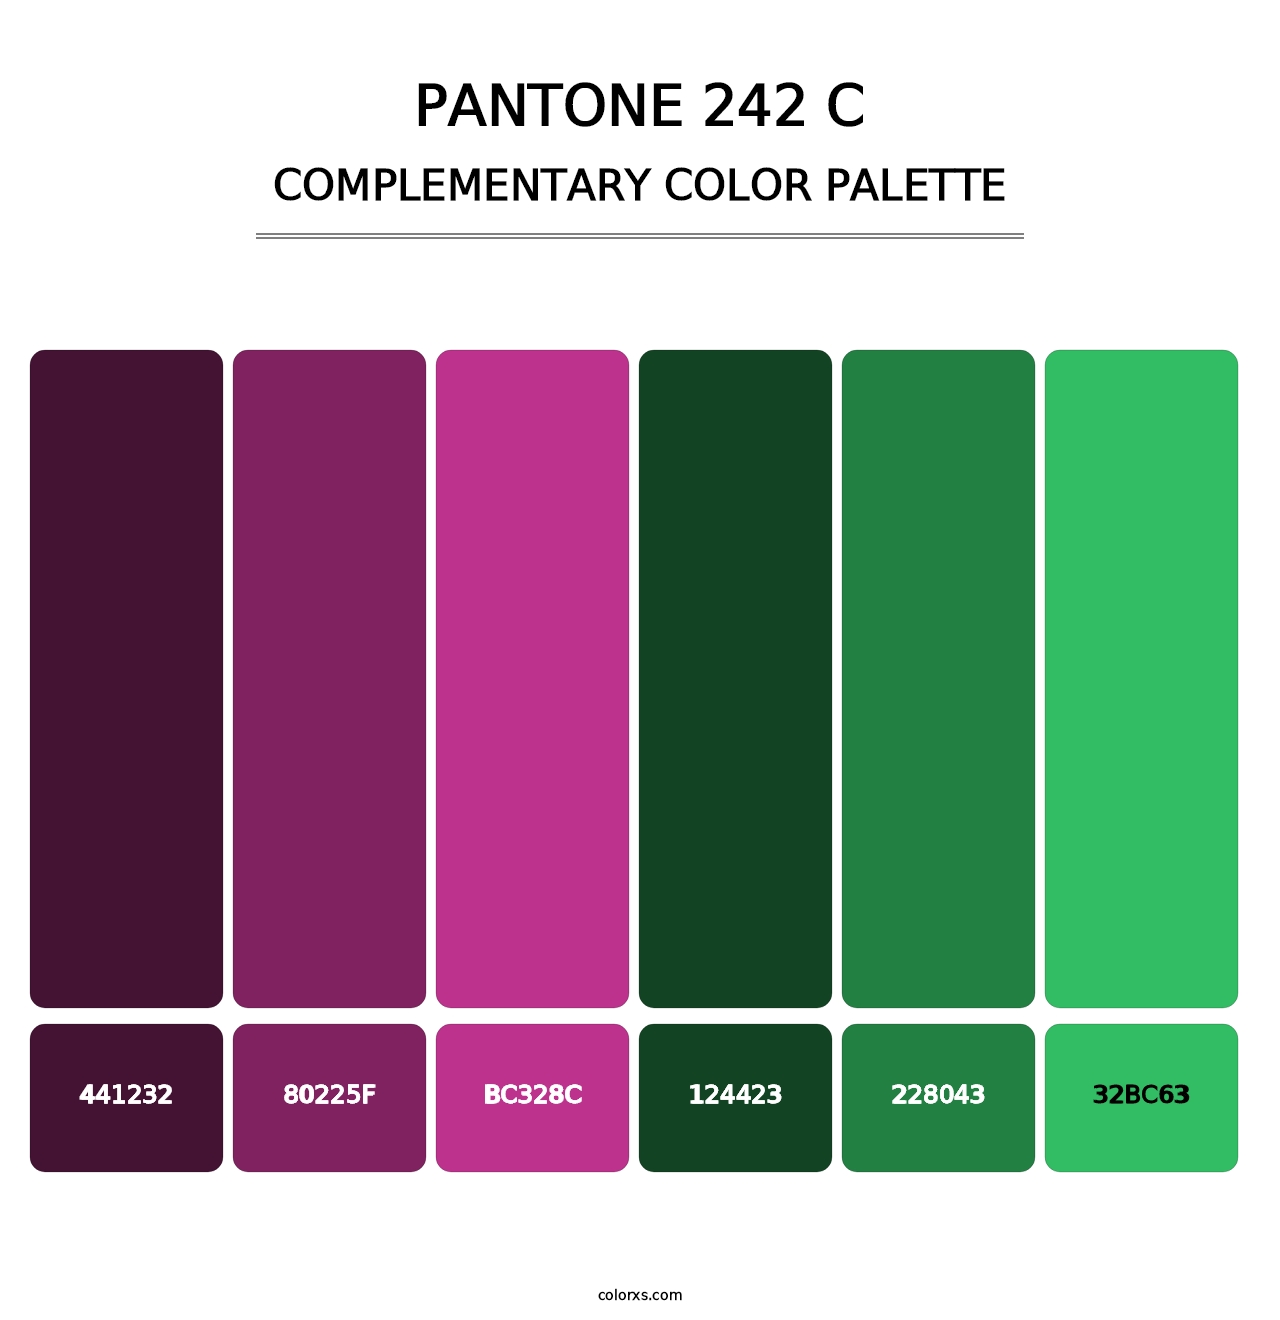 PANTONE 242 C - Complementary Color Palette